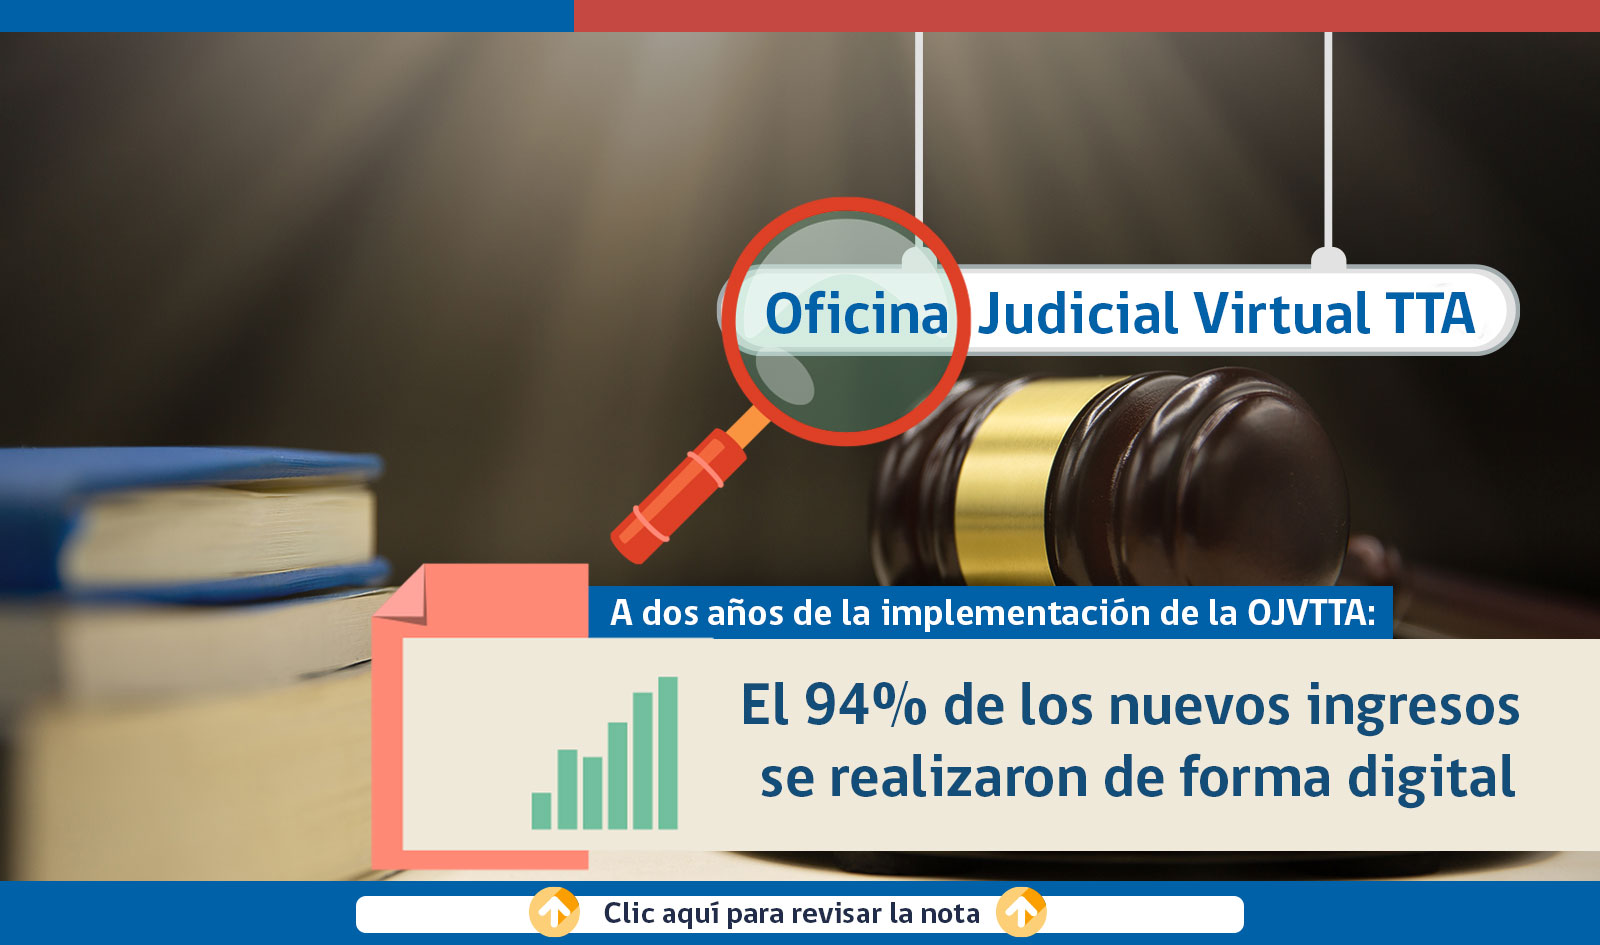 Oficina Judicial Virtual TTA